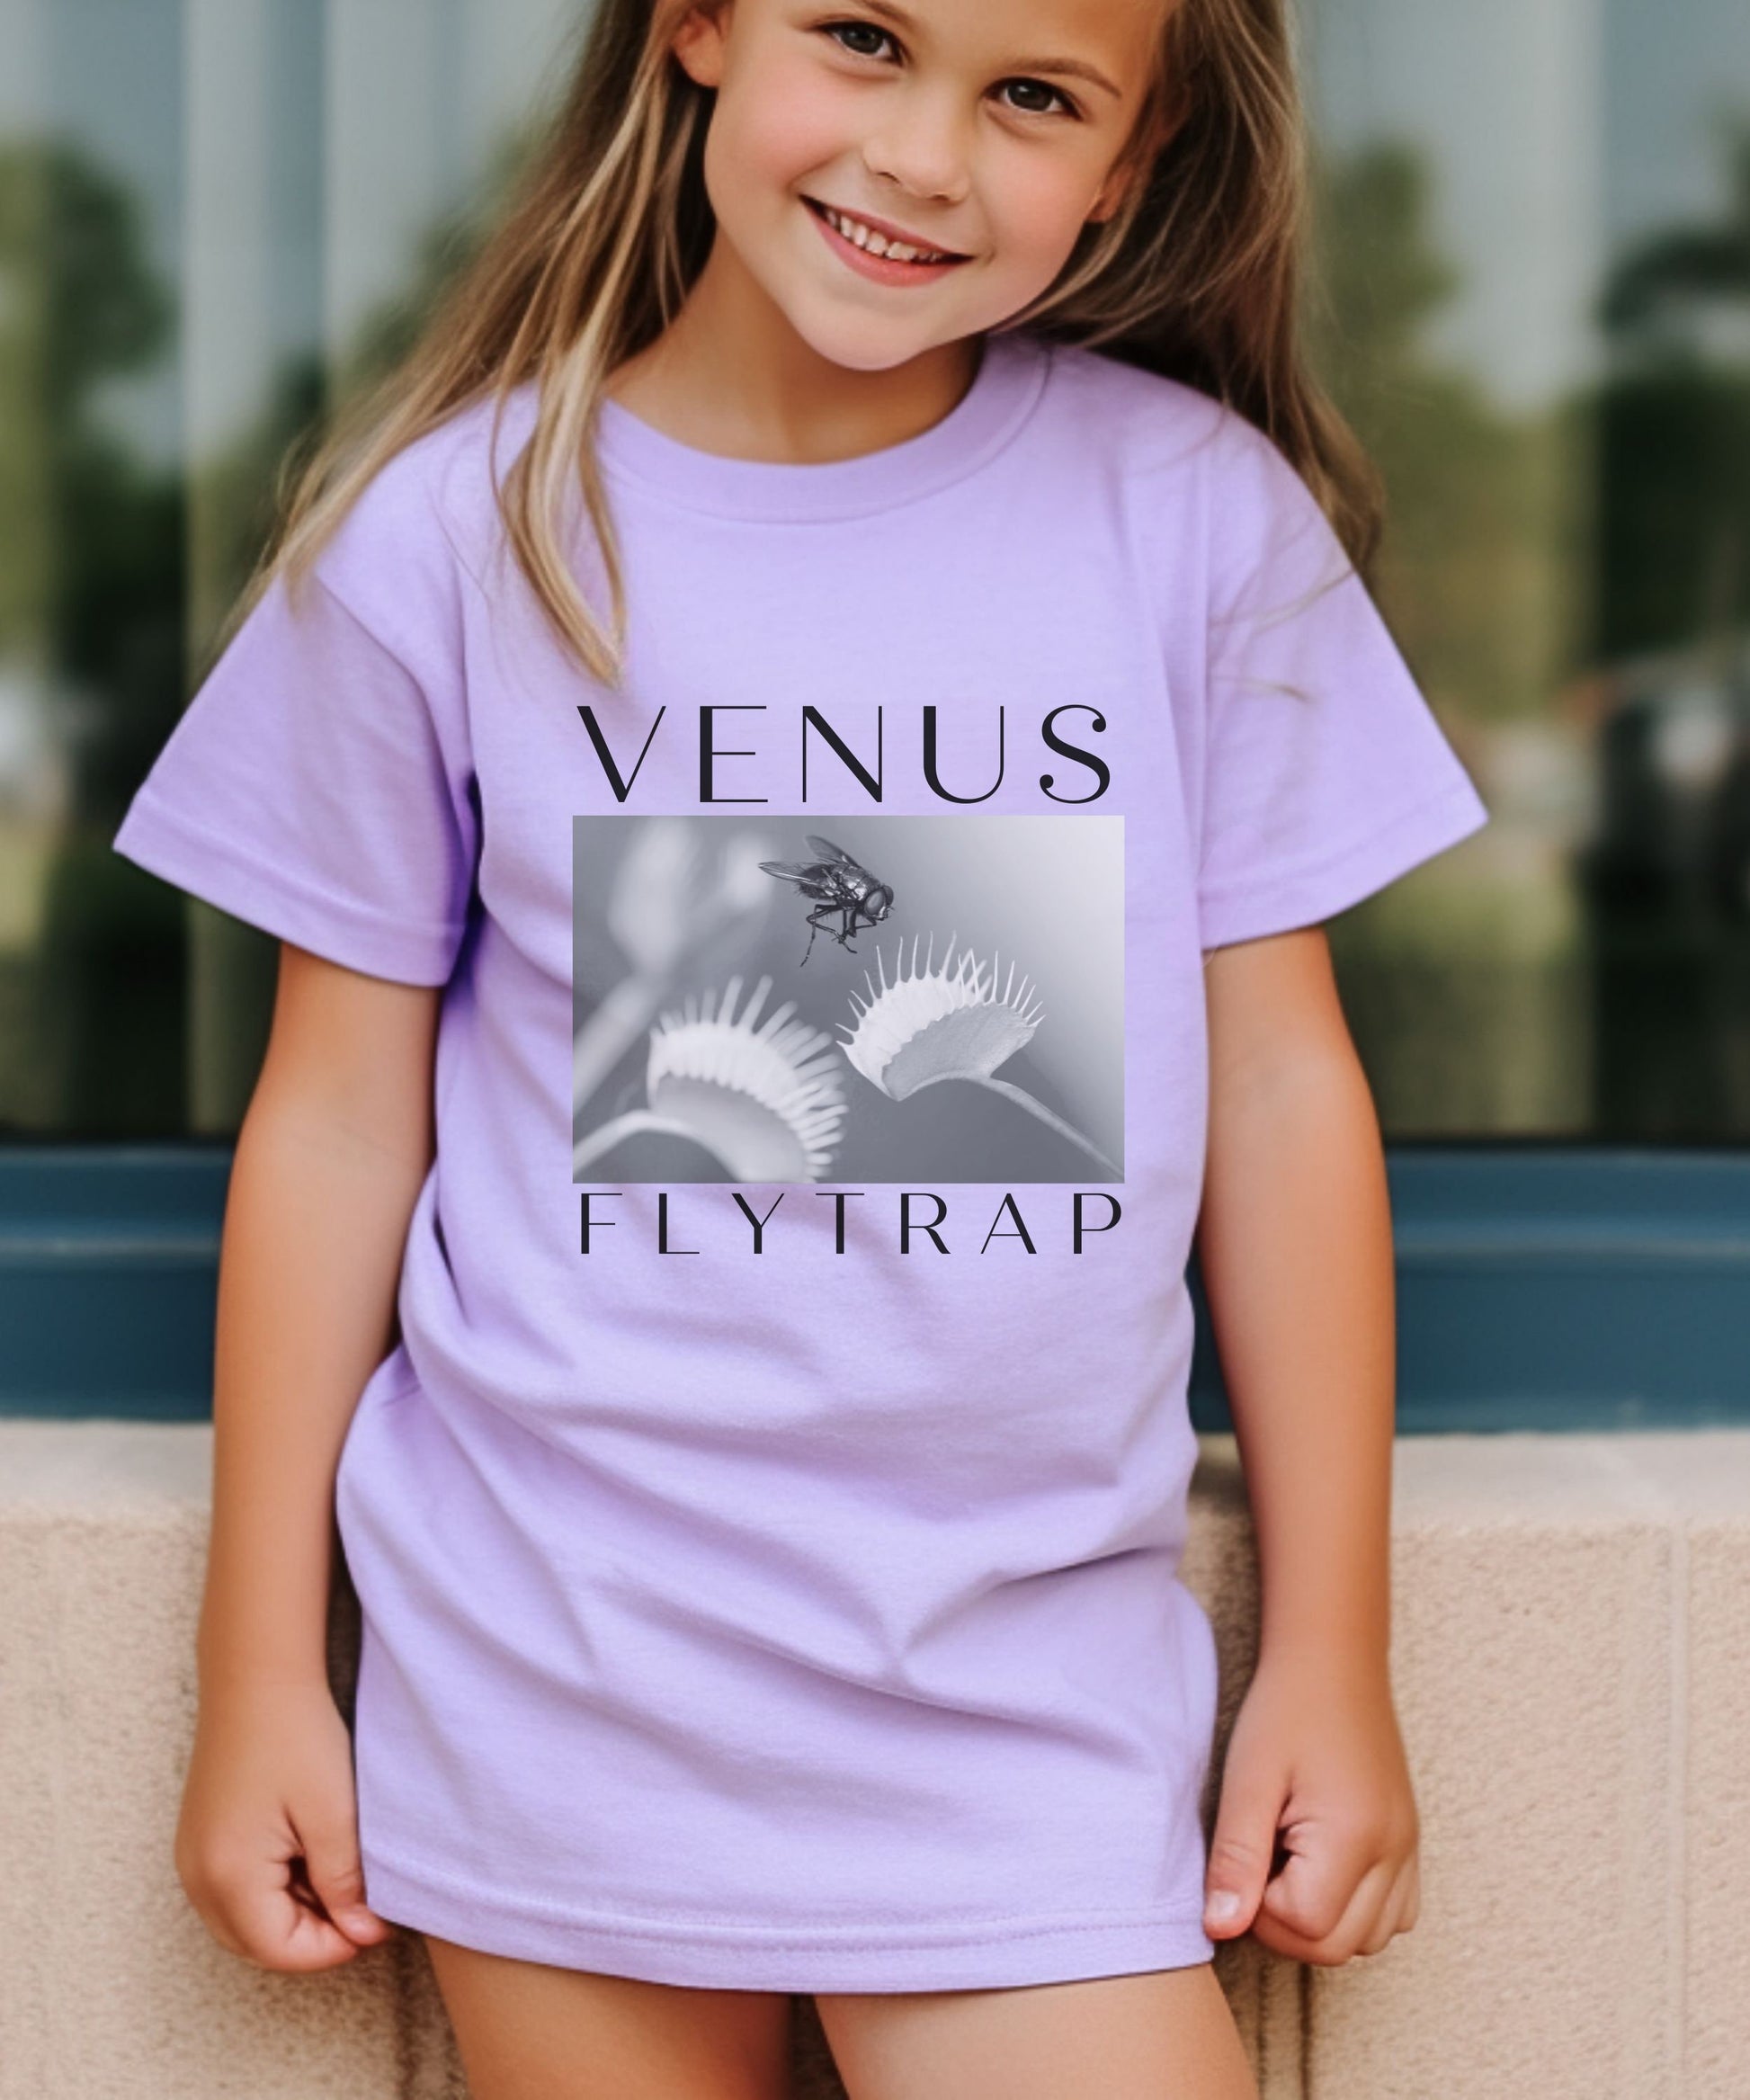 Venus Flytrap Kids Shirt Venus Fly Trap Shirt Carnivorous Plant Lover Shirt Kids, Gender Neutral Kids Clothes, Plant Shirt Kids Band Tee